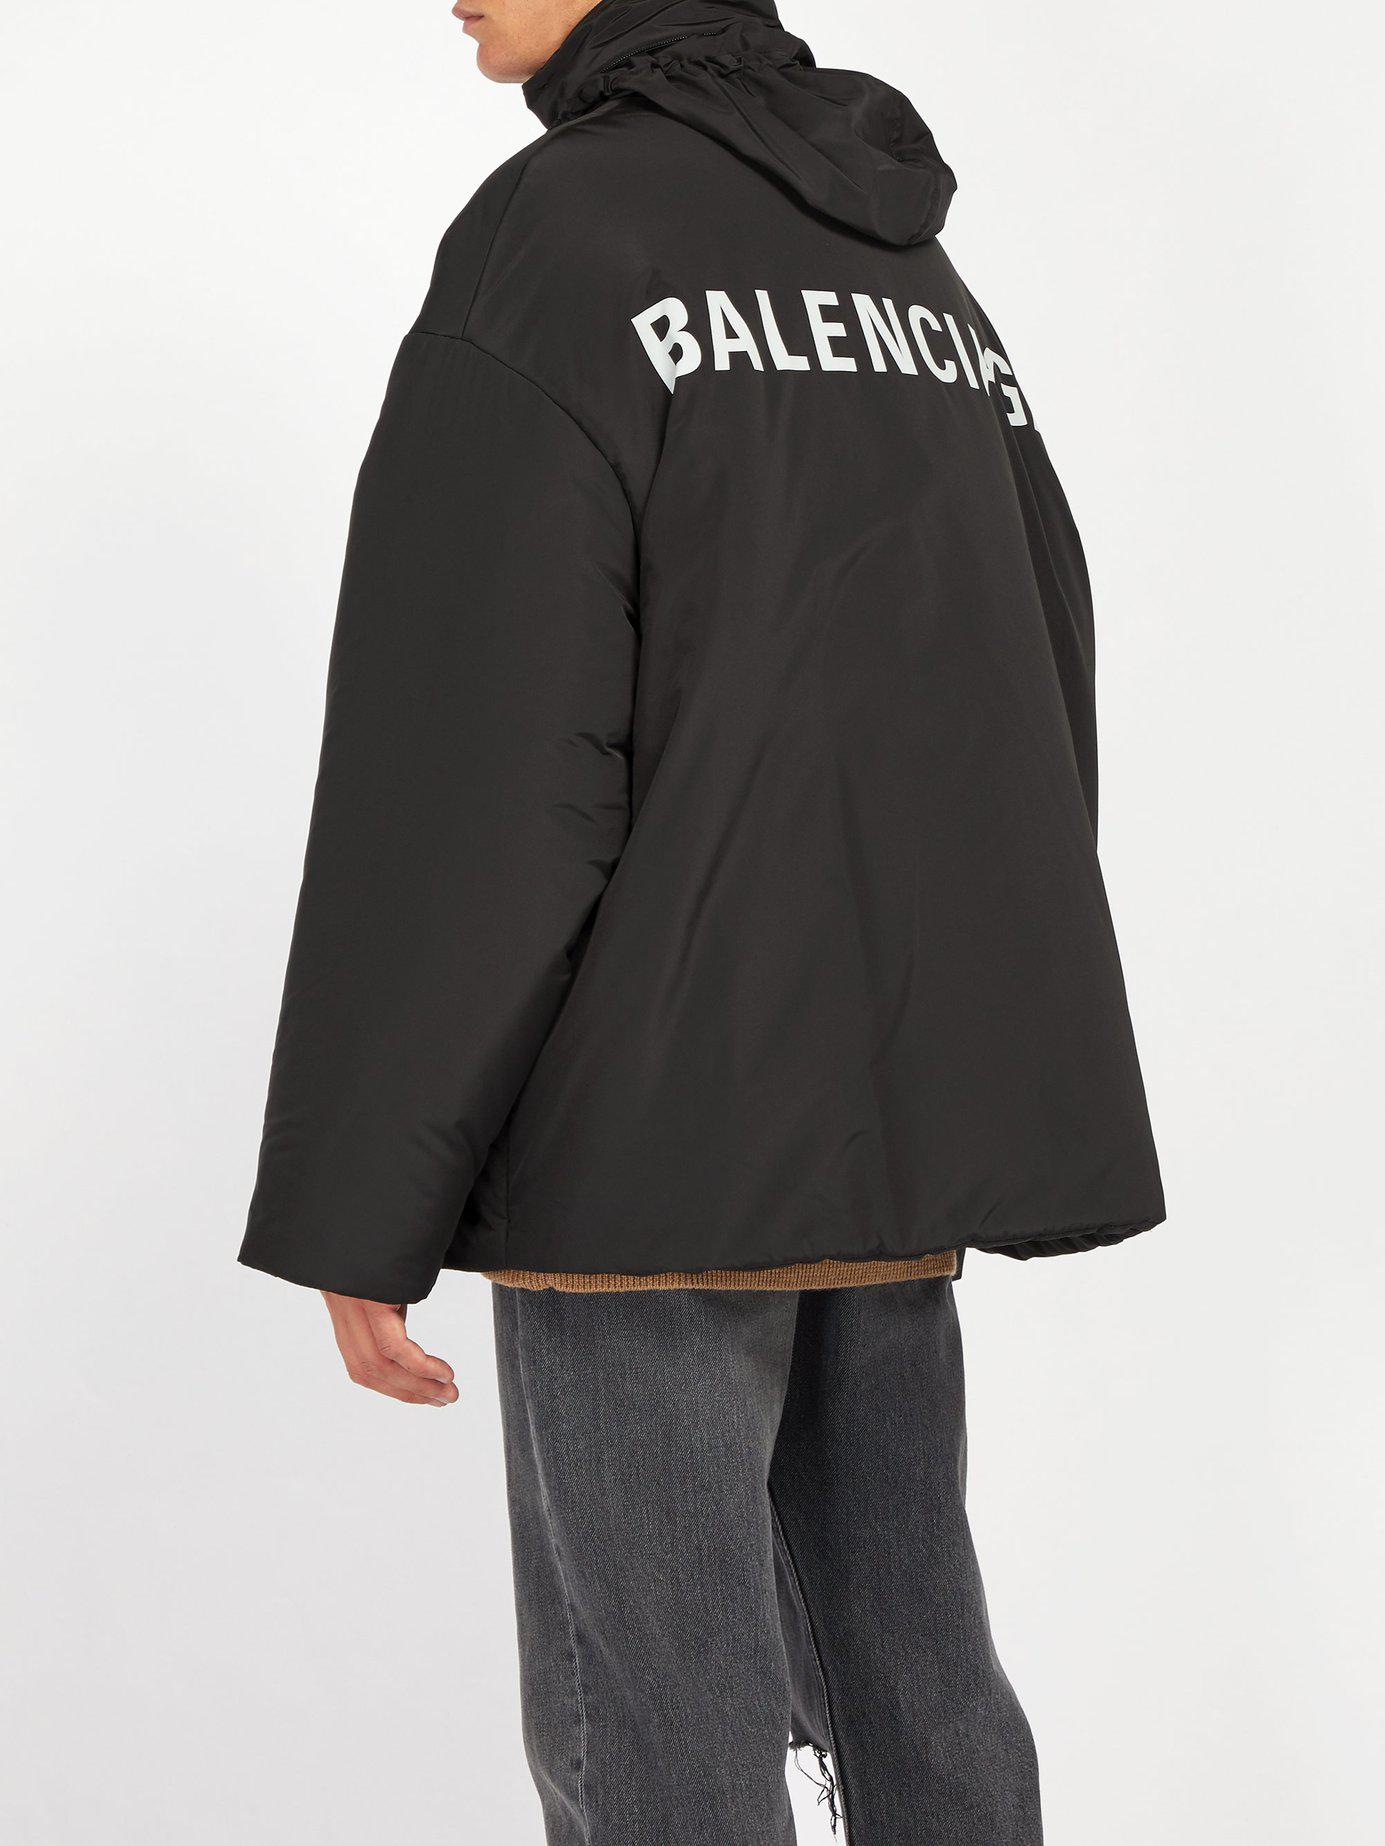 Balenciaga Logo Windbreaker Jacket in Black for Men |